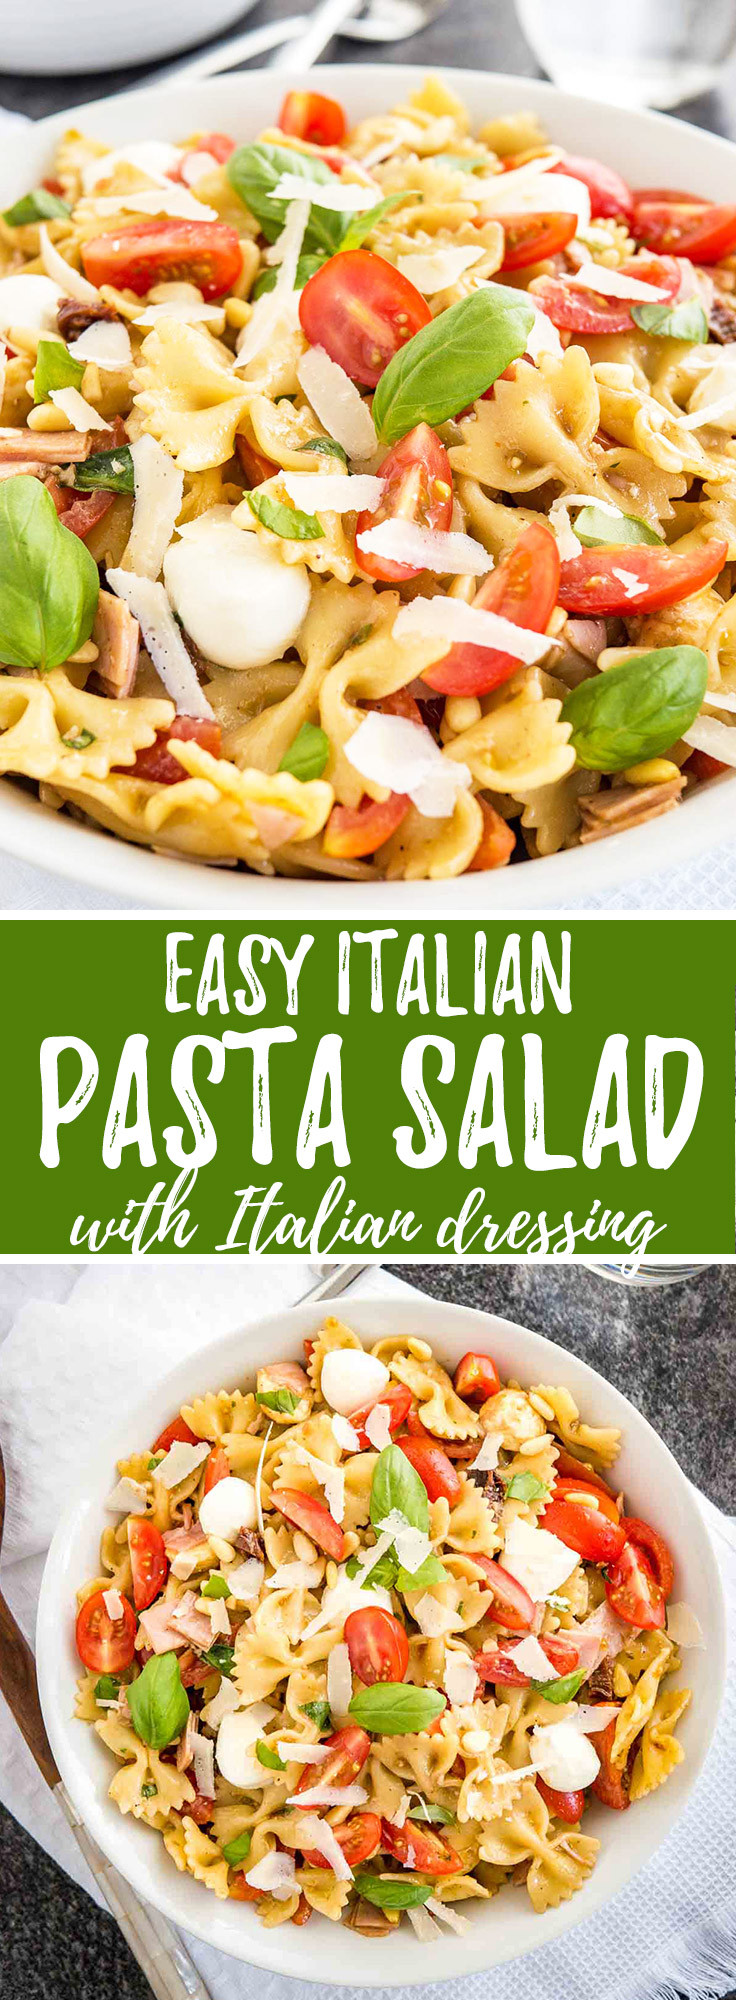 Pasta Salad Recipe Italian Dressing
 Pasta Salad with Italian Dressing